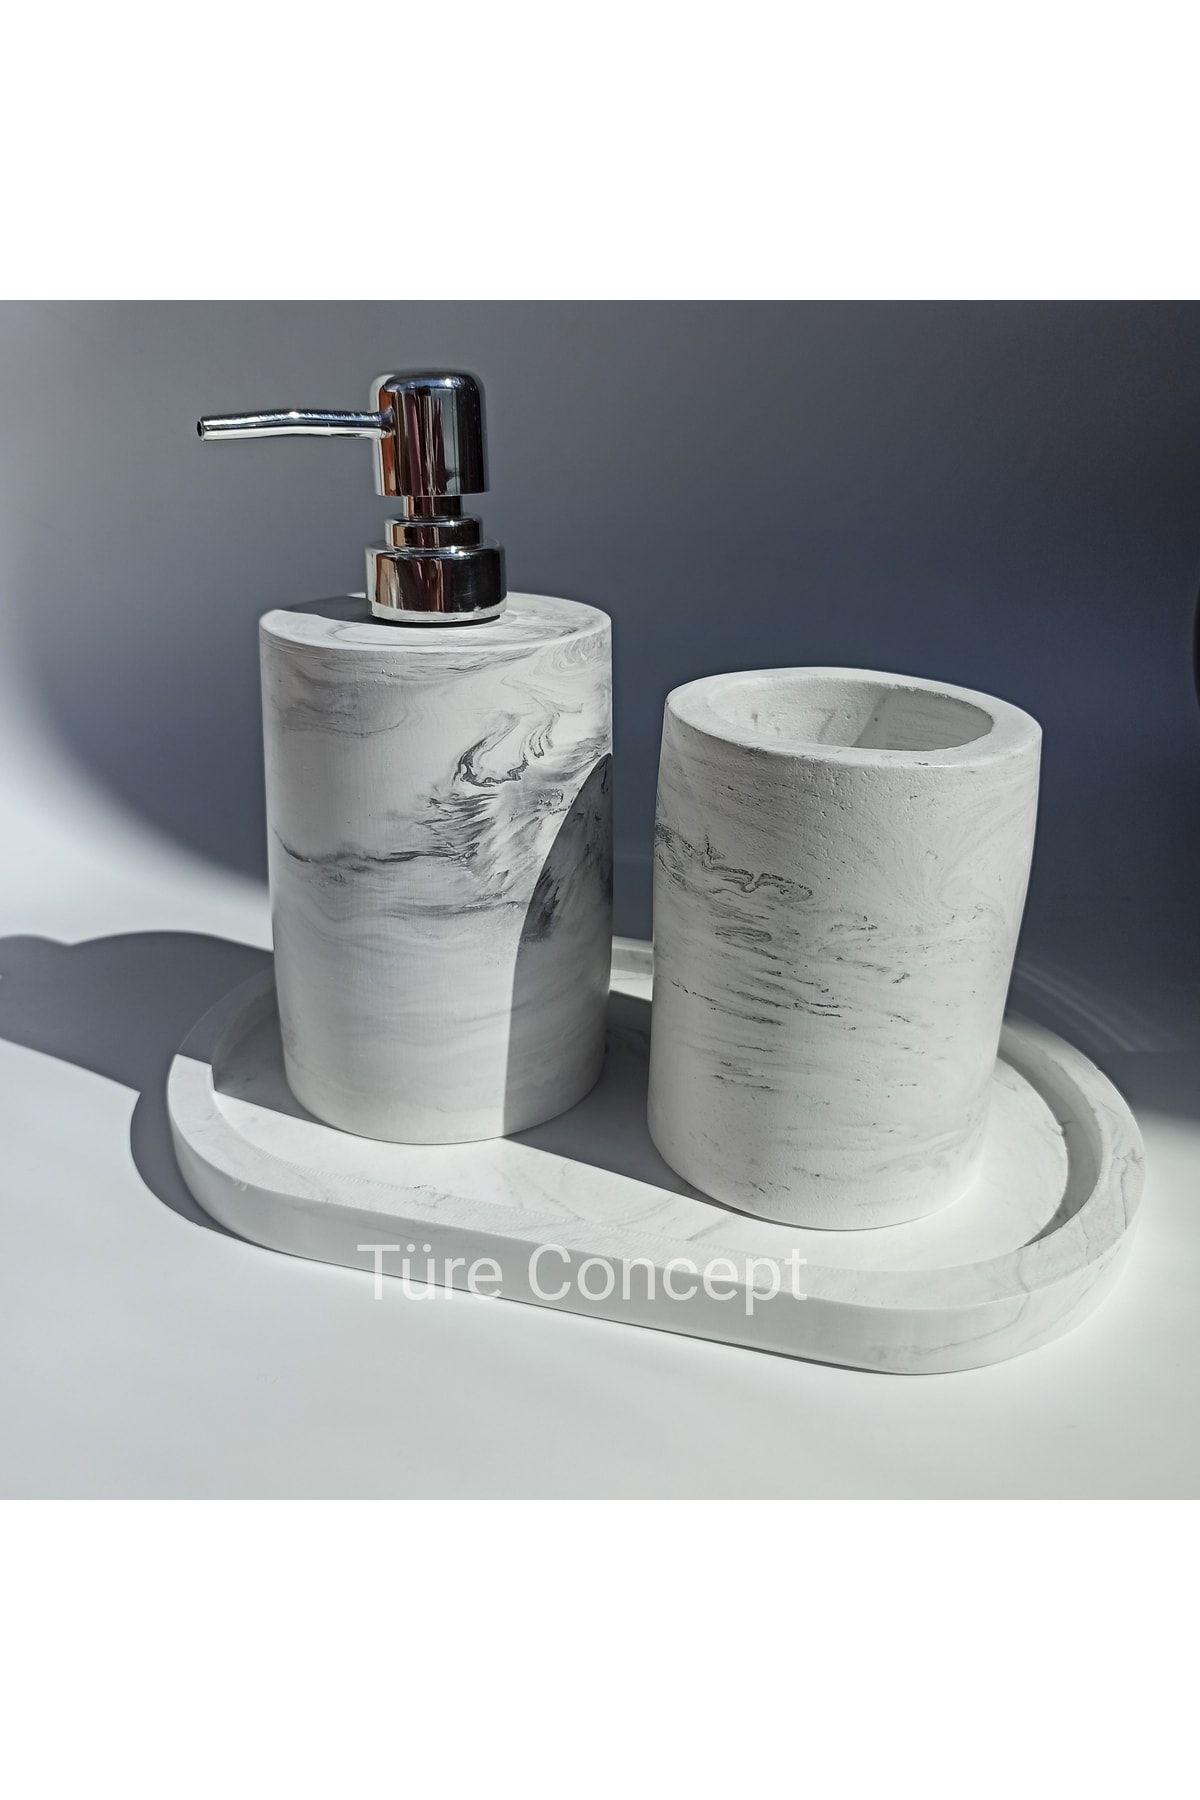 Ture Concept Mermer Desenli Banyo Set